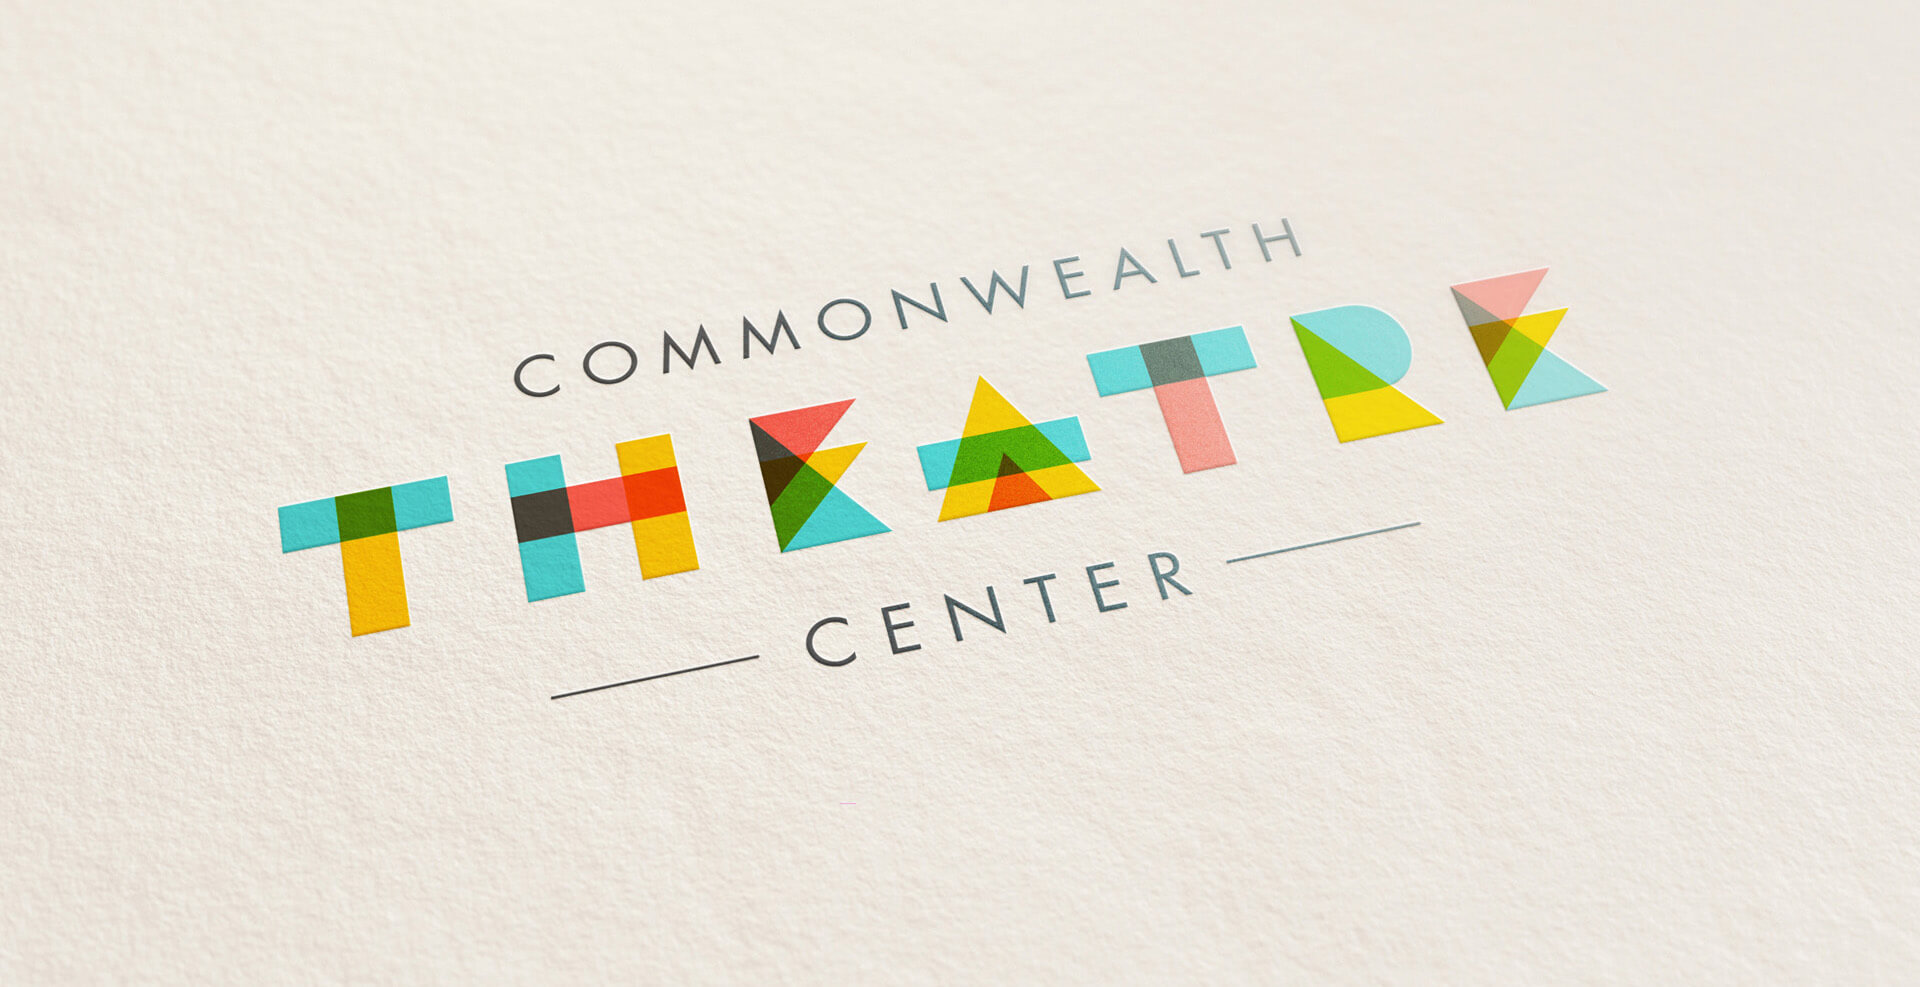 Commonwealth Theatre Center logo